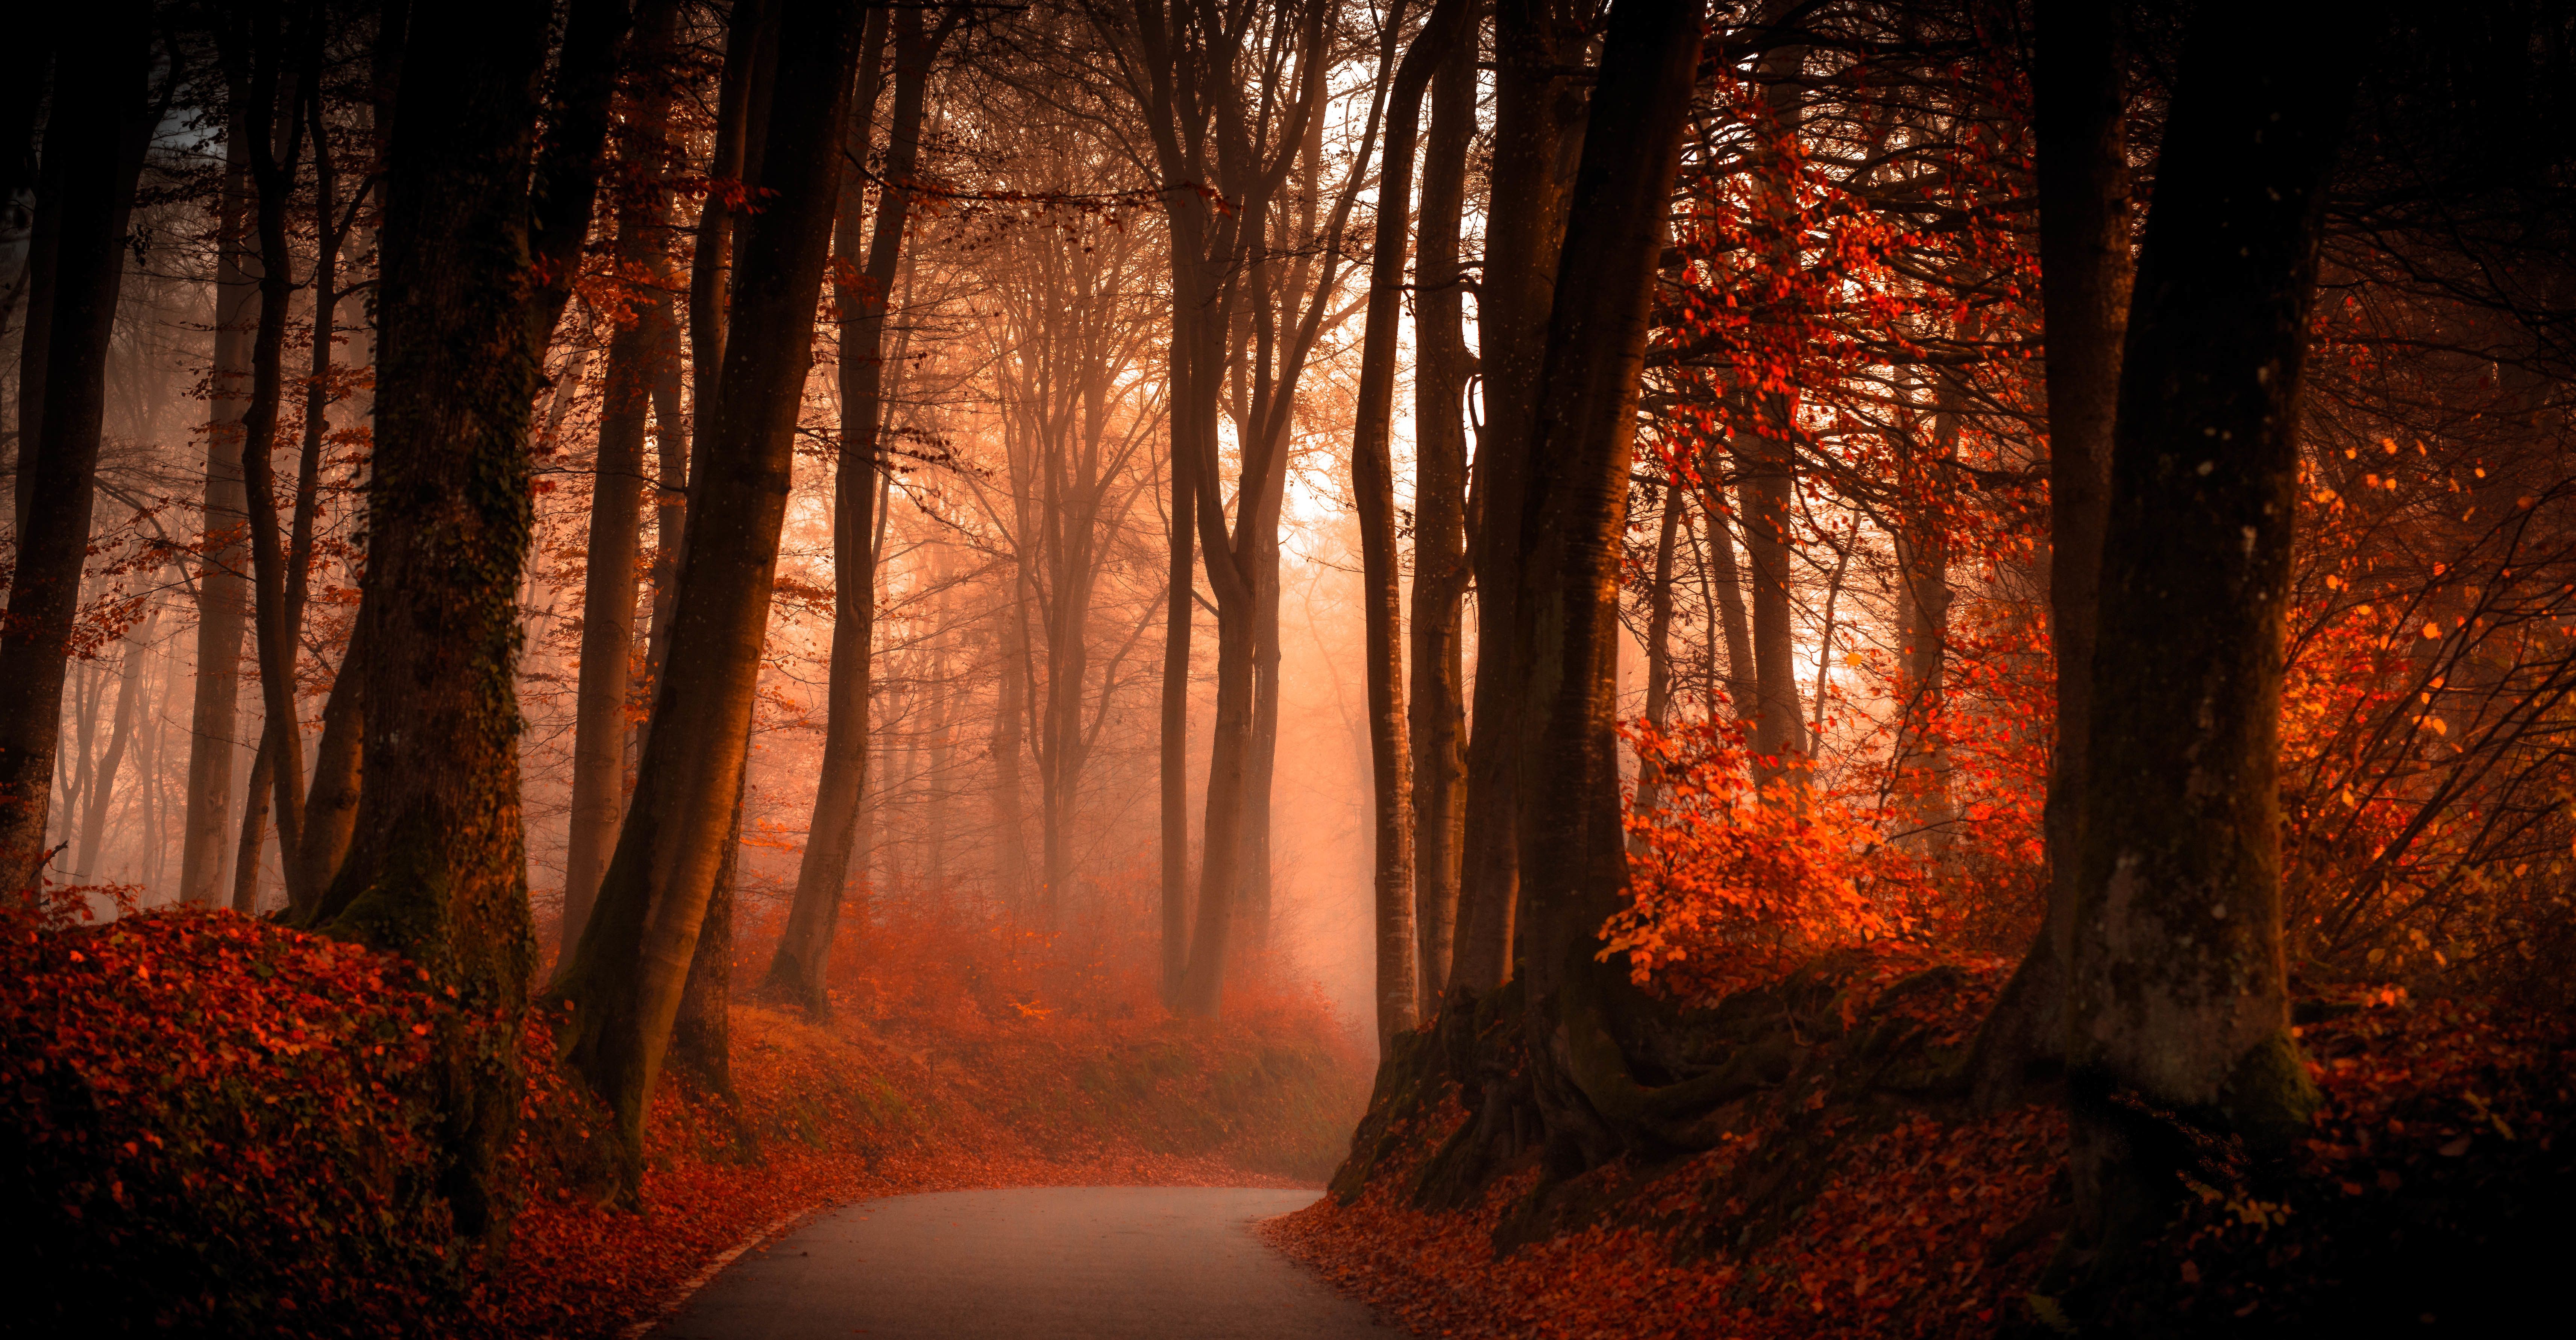 Foggy Winding Road in Autumn Forest 5k Retina Ultra HD Wallpaper